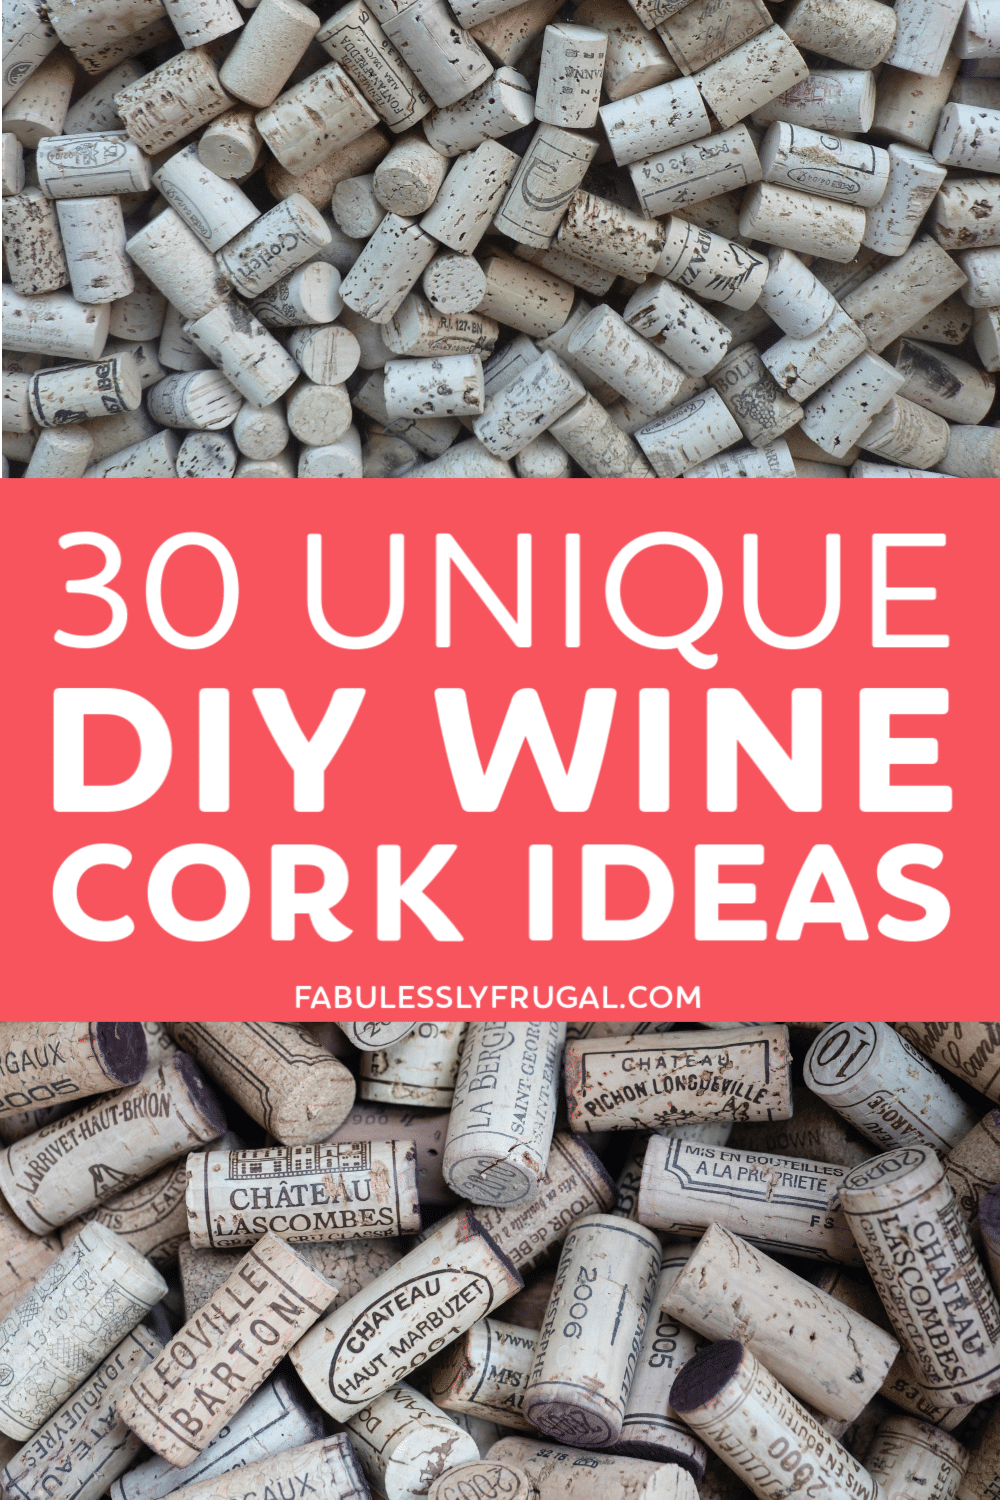 DIY wine cork ideas